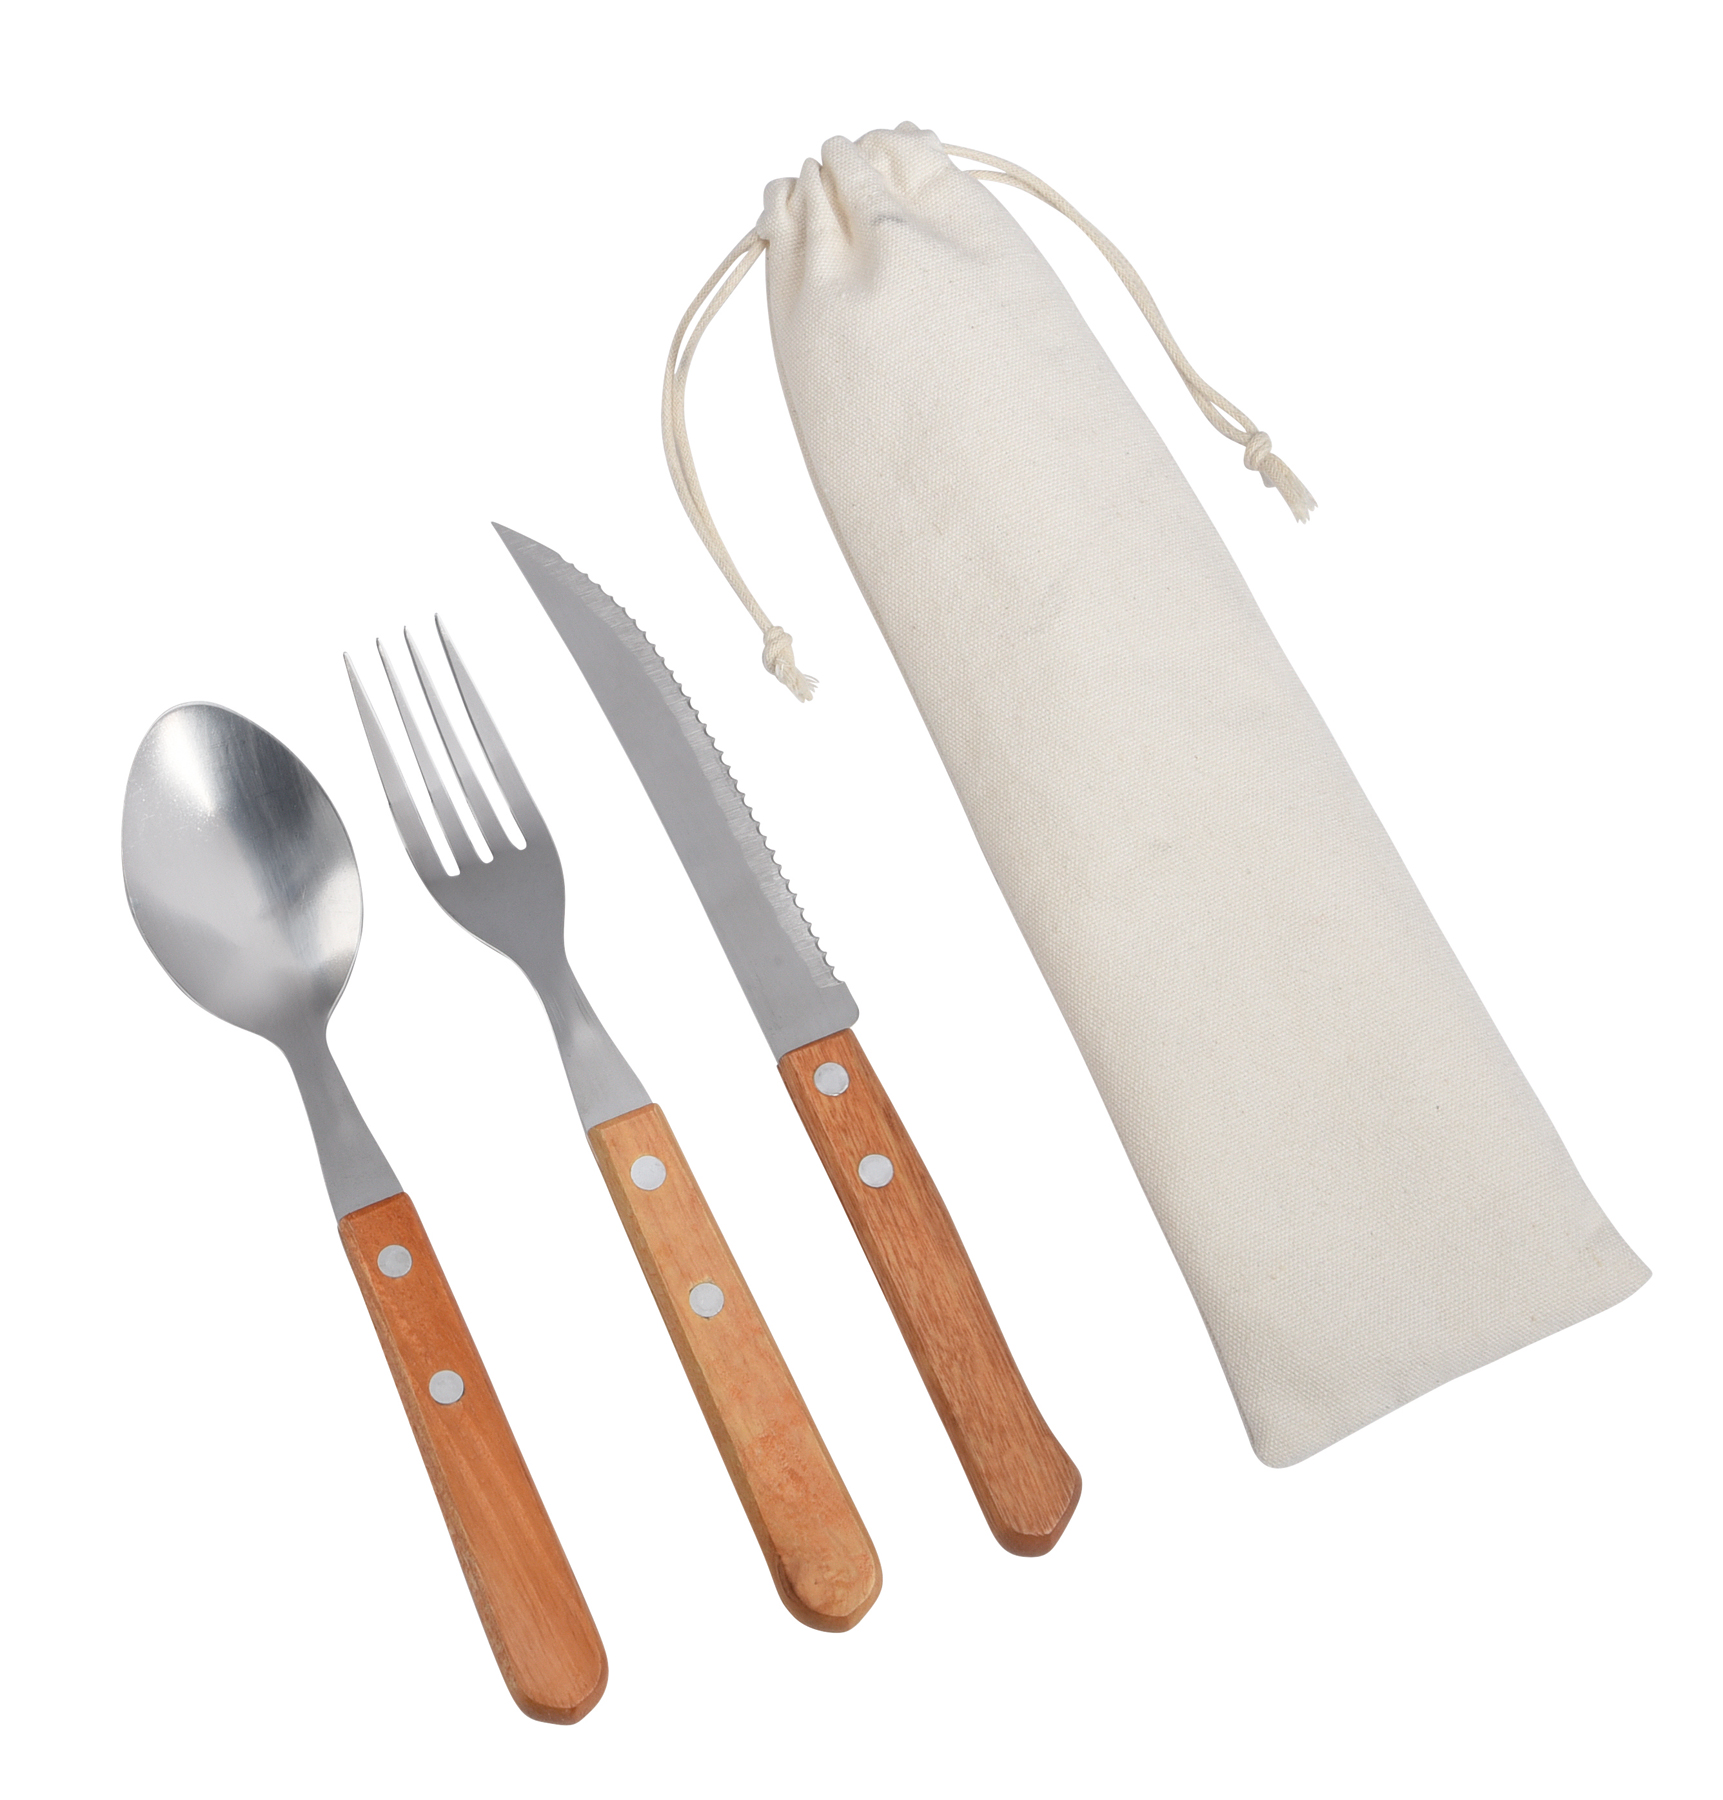 Cutlery set ECO TRIP, in a small cotton bag - multicolor